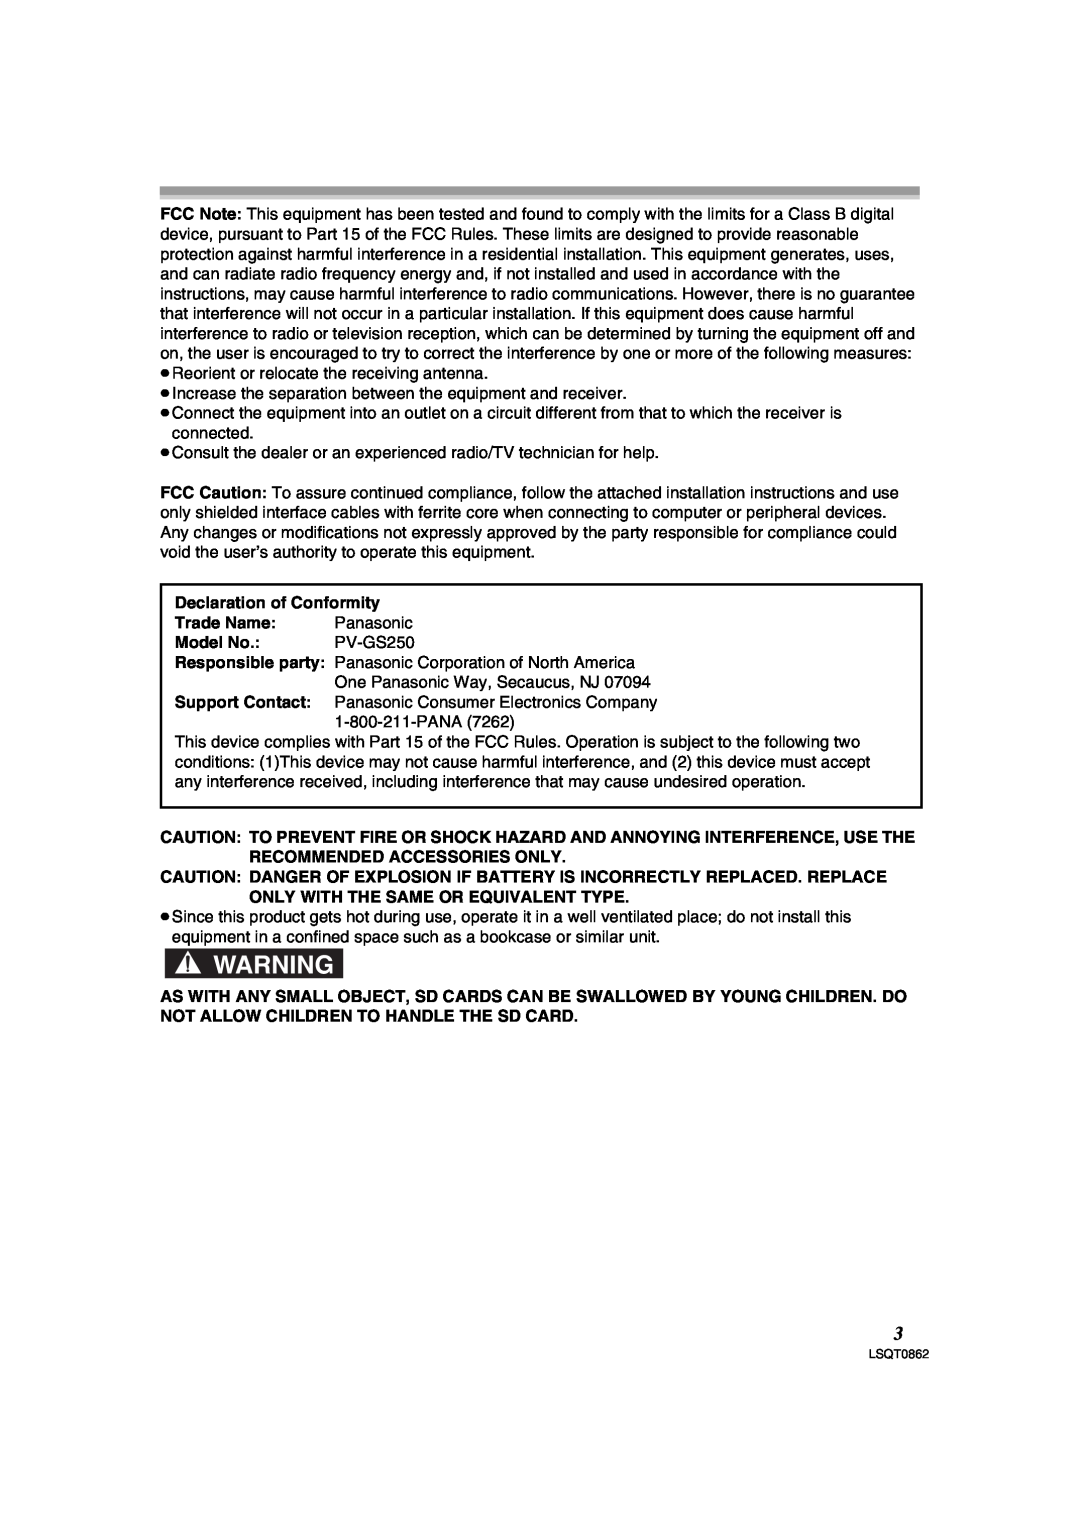 Panasonic PV-GS250 operating instructions Declaration of Conformity, Trade Name, Panasonic, Model No 